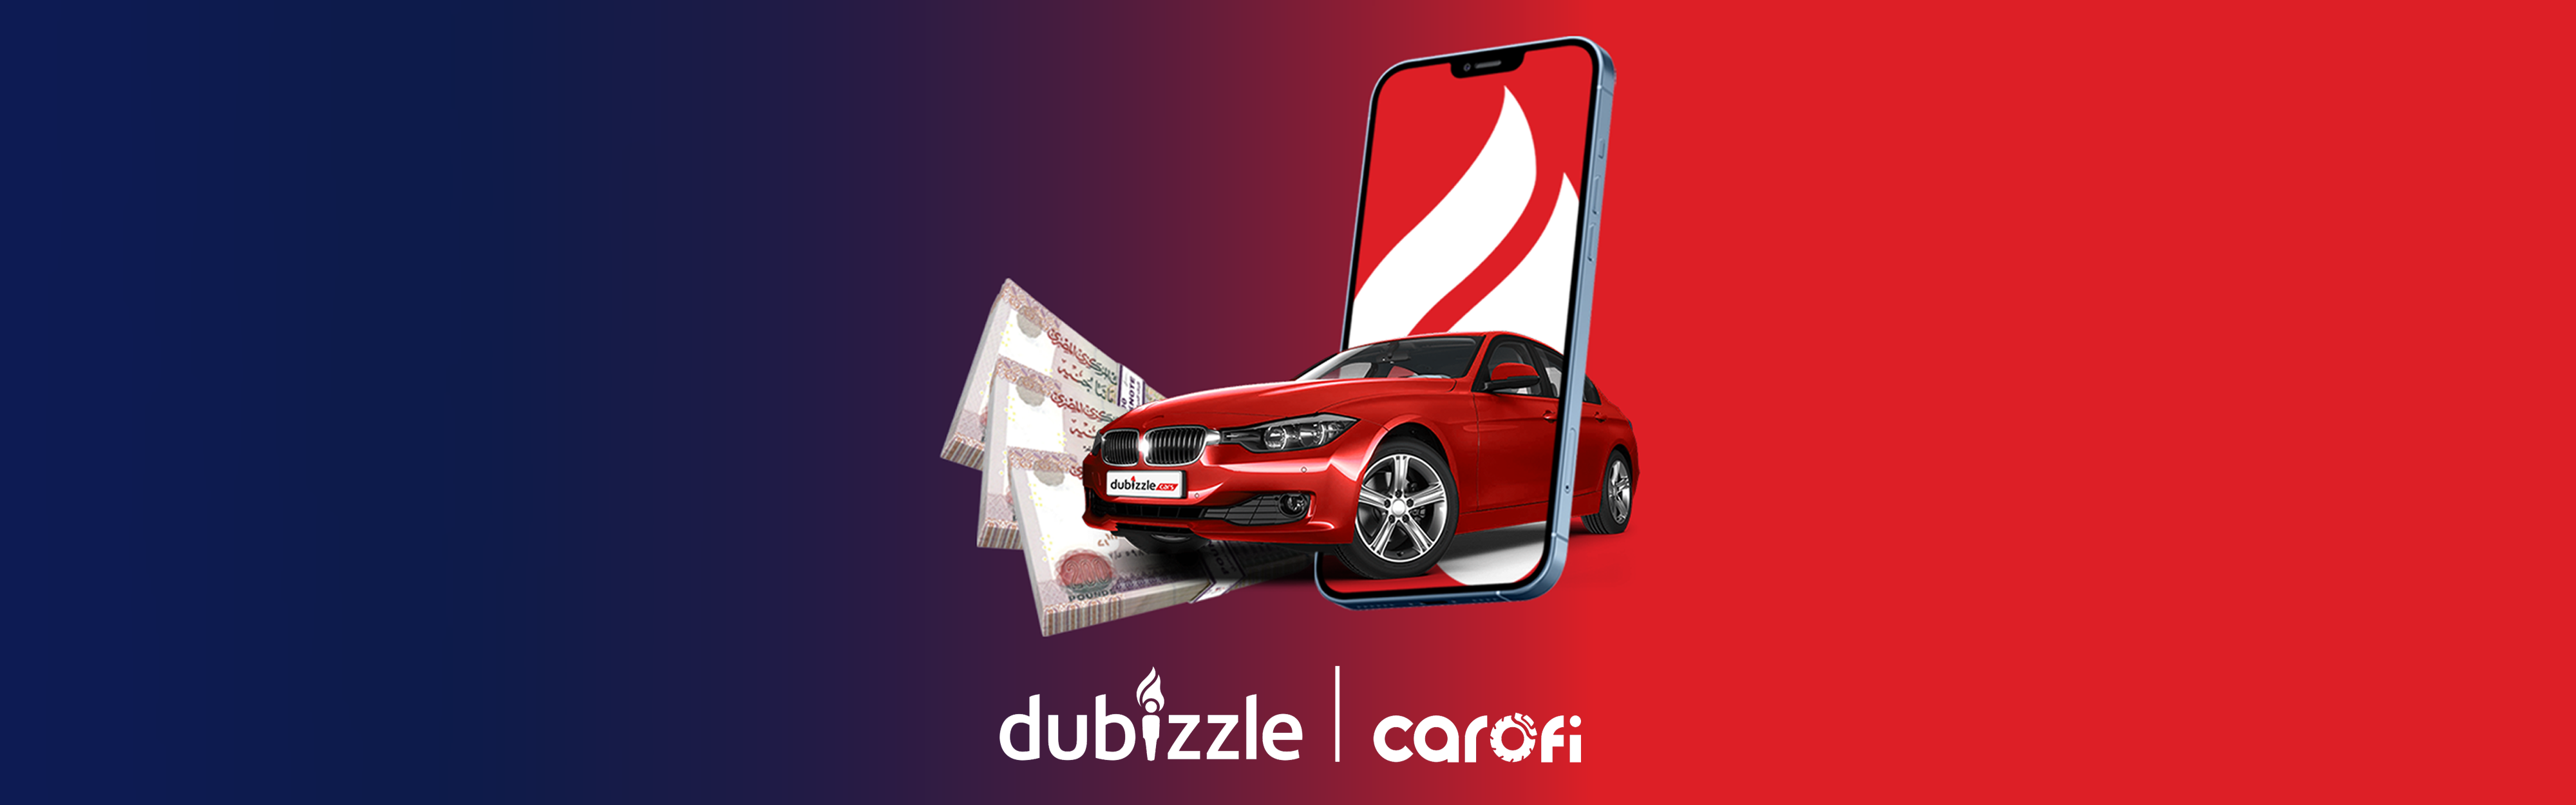 dubizzle and Carofi Revolutionize the Cars’ Buying & Selling Experience